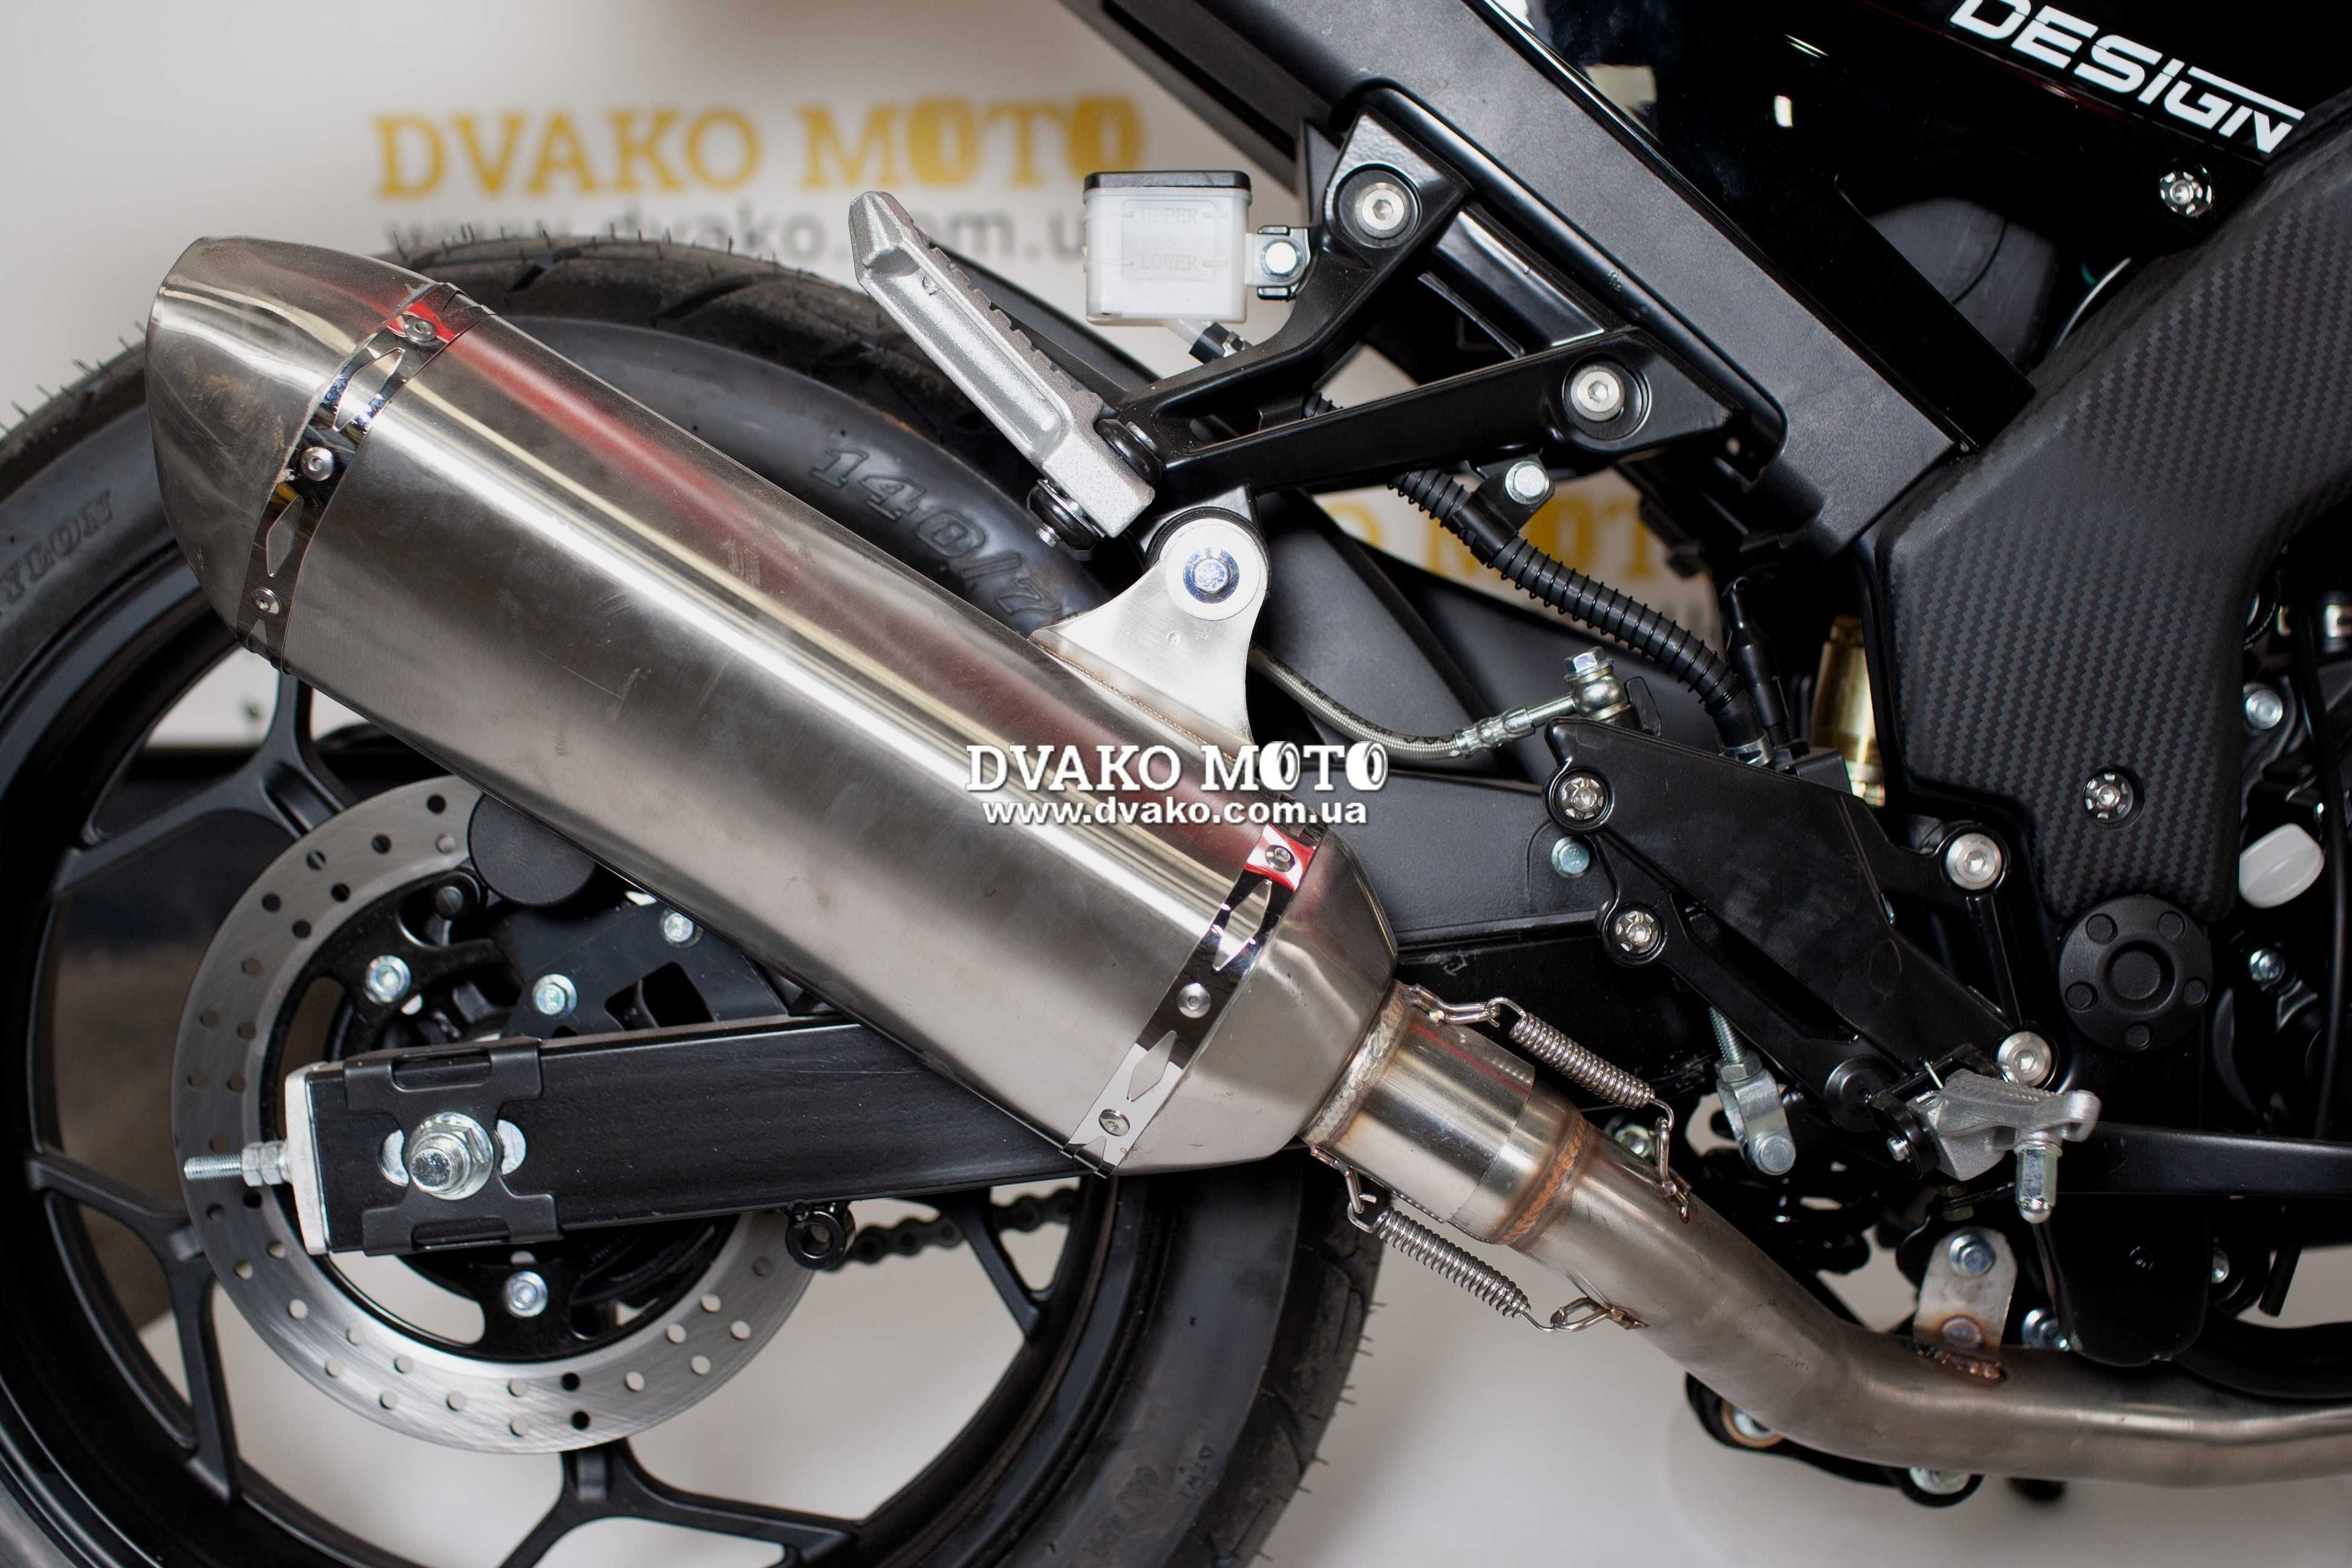 Новый Мотоцикл Rider R1M 250. Сервис, Гарантия, КРЕДИТ (Мотосалон)!!